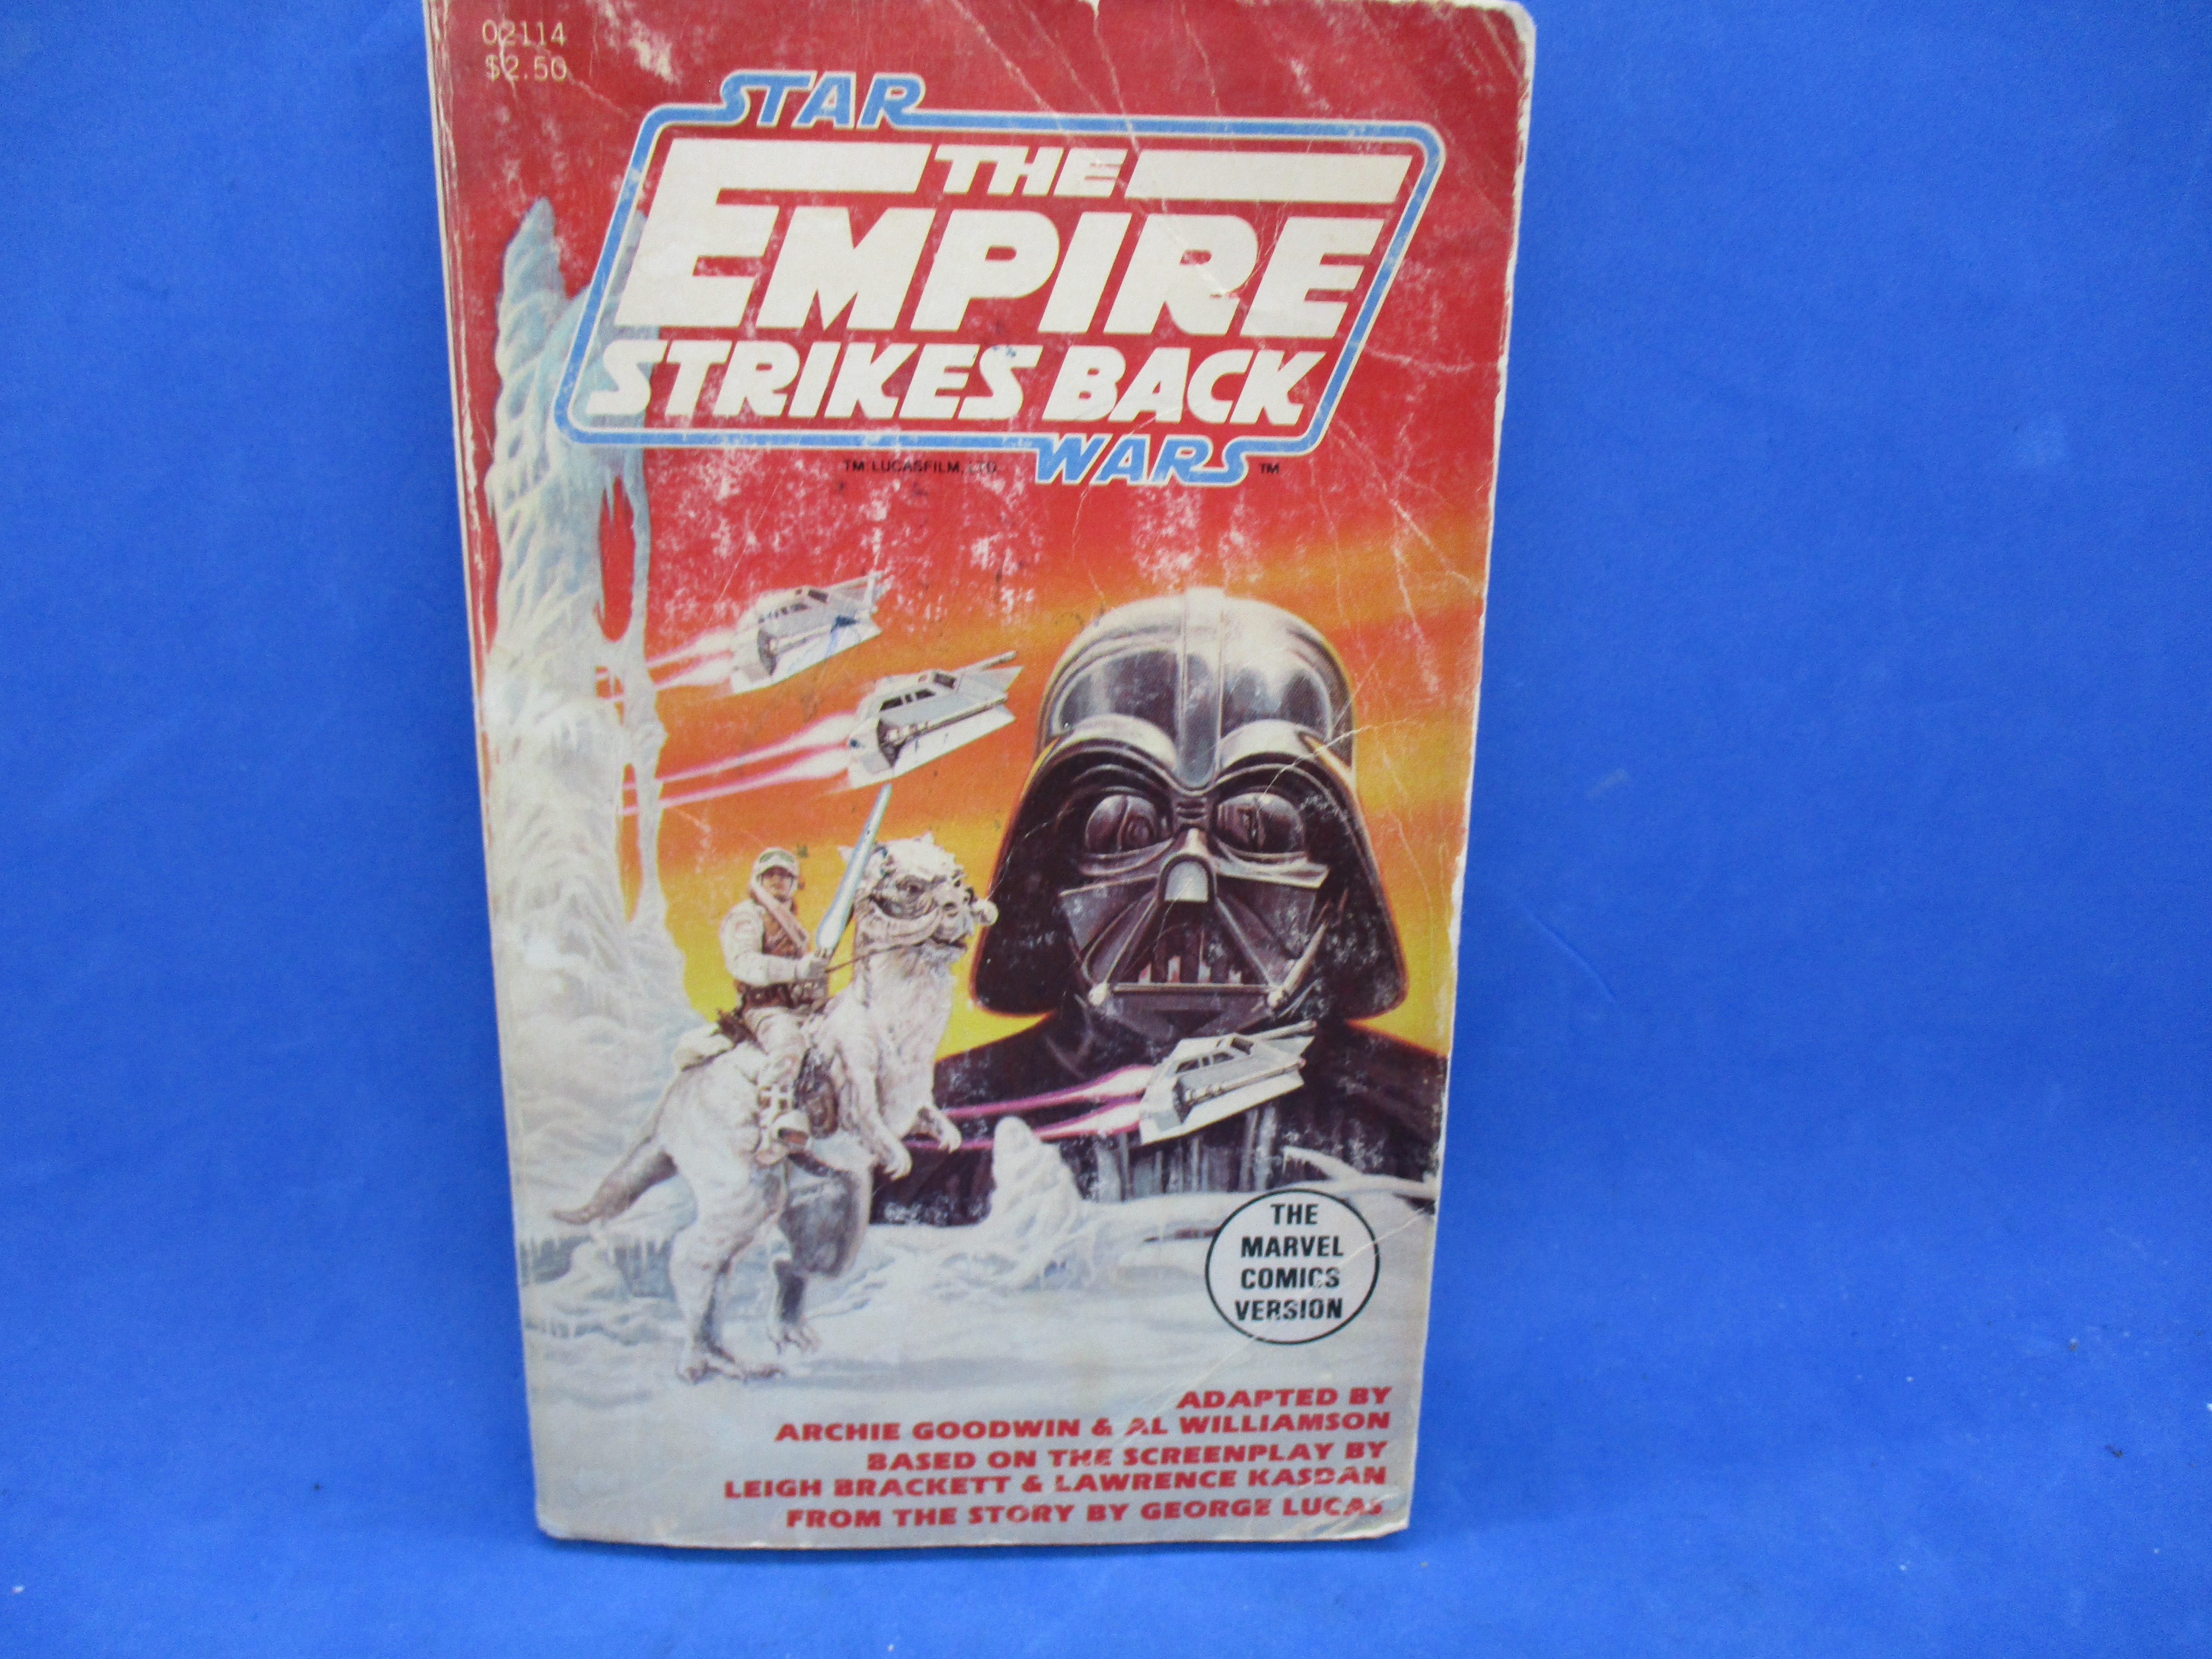 Star Wars: The Empire Strikes Back – Marvel Comics Version 1st Edition (1980)